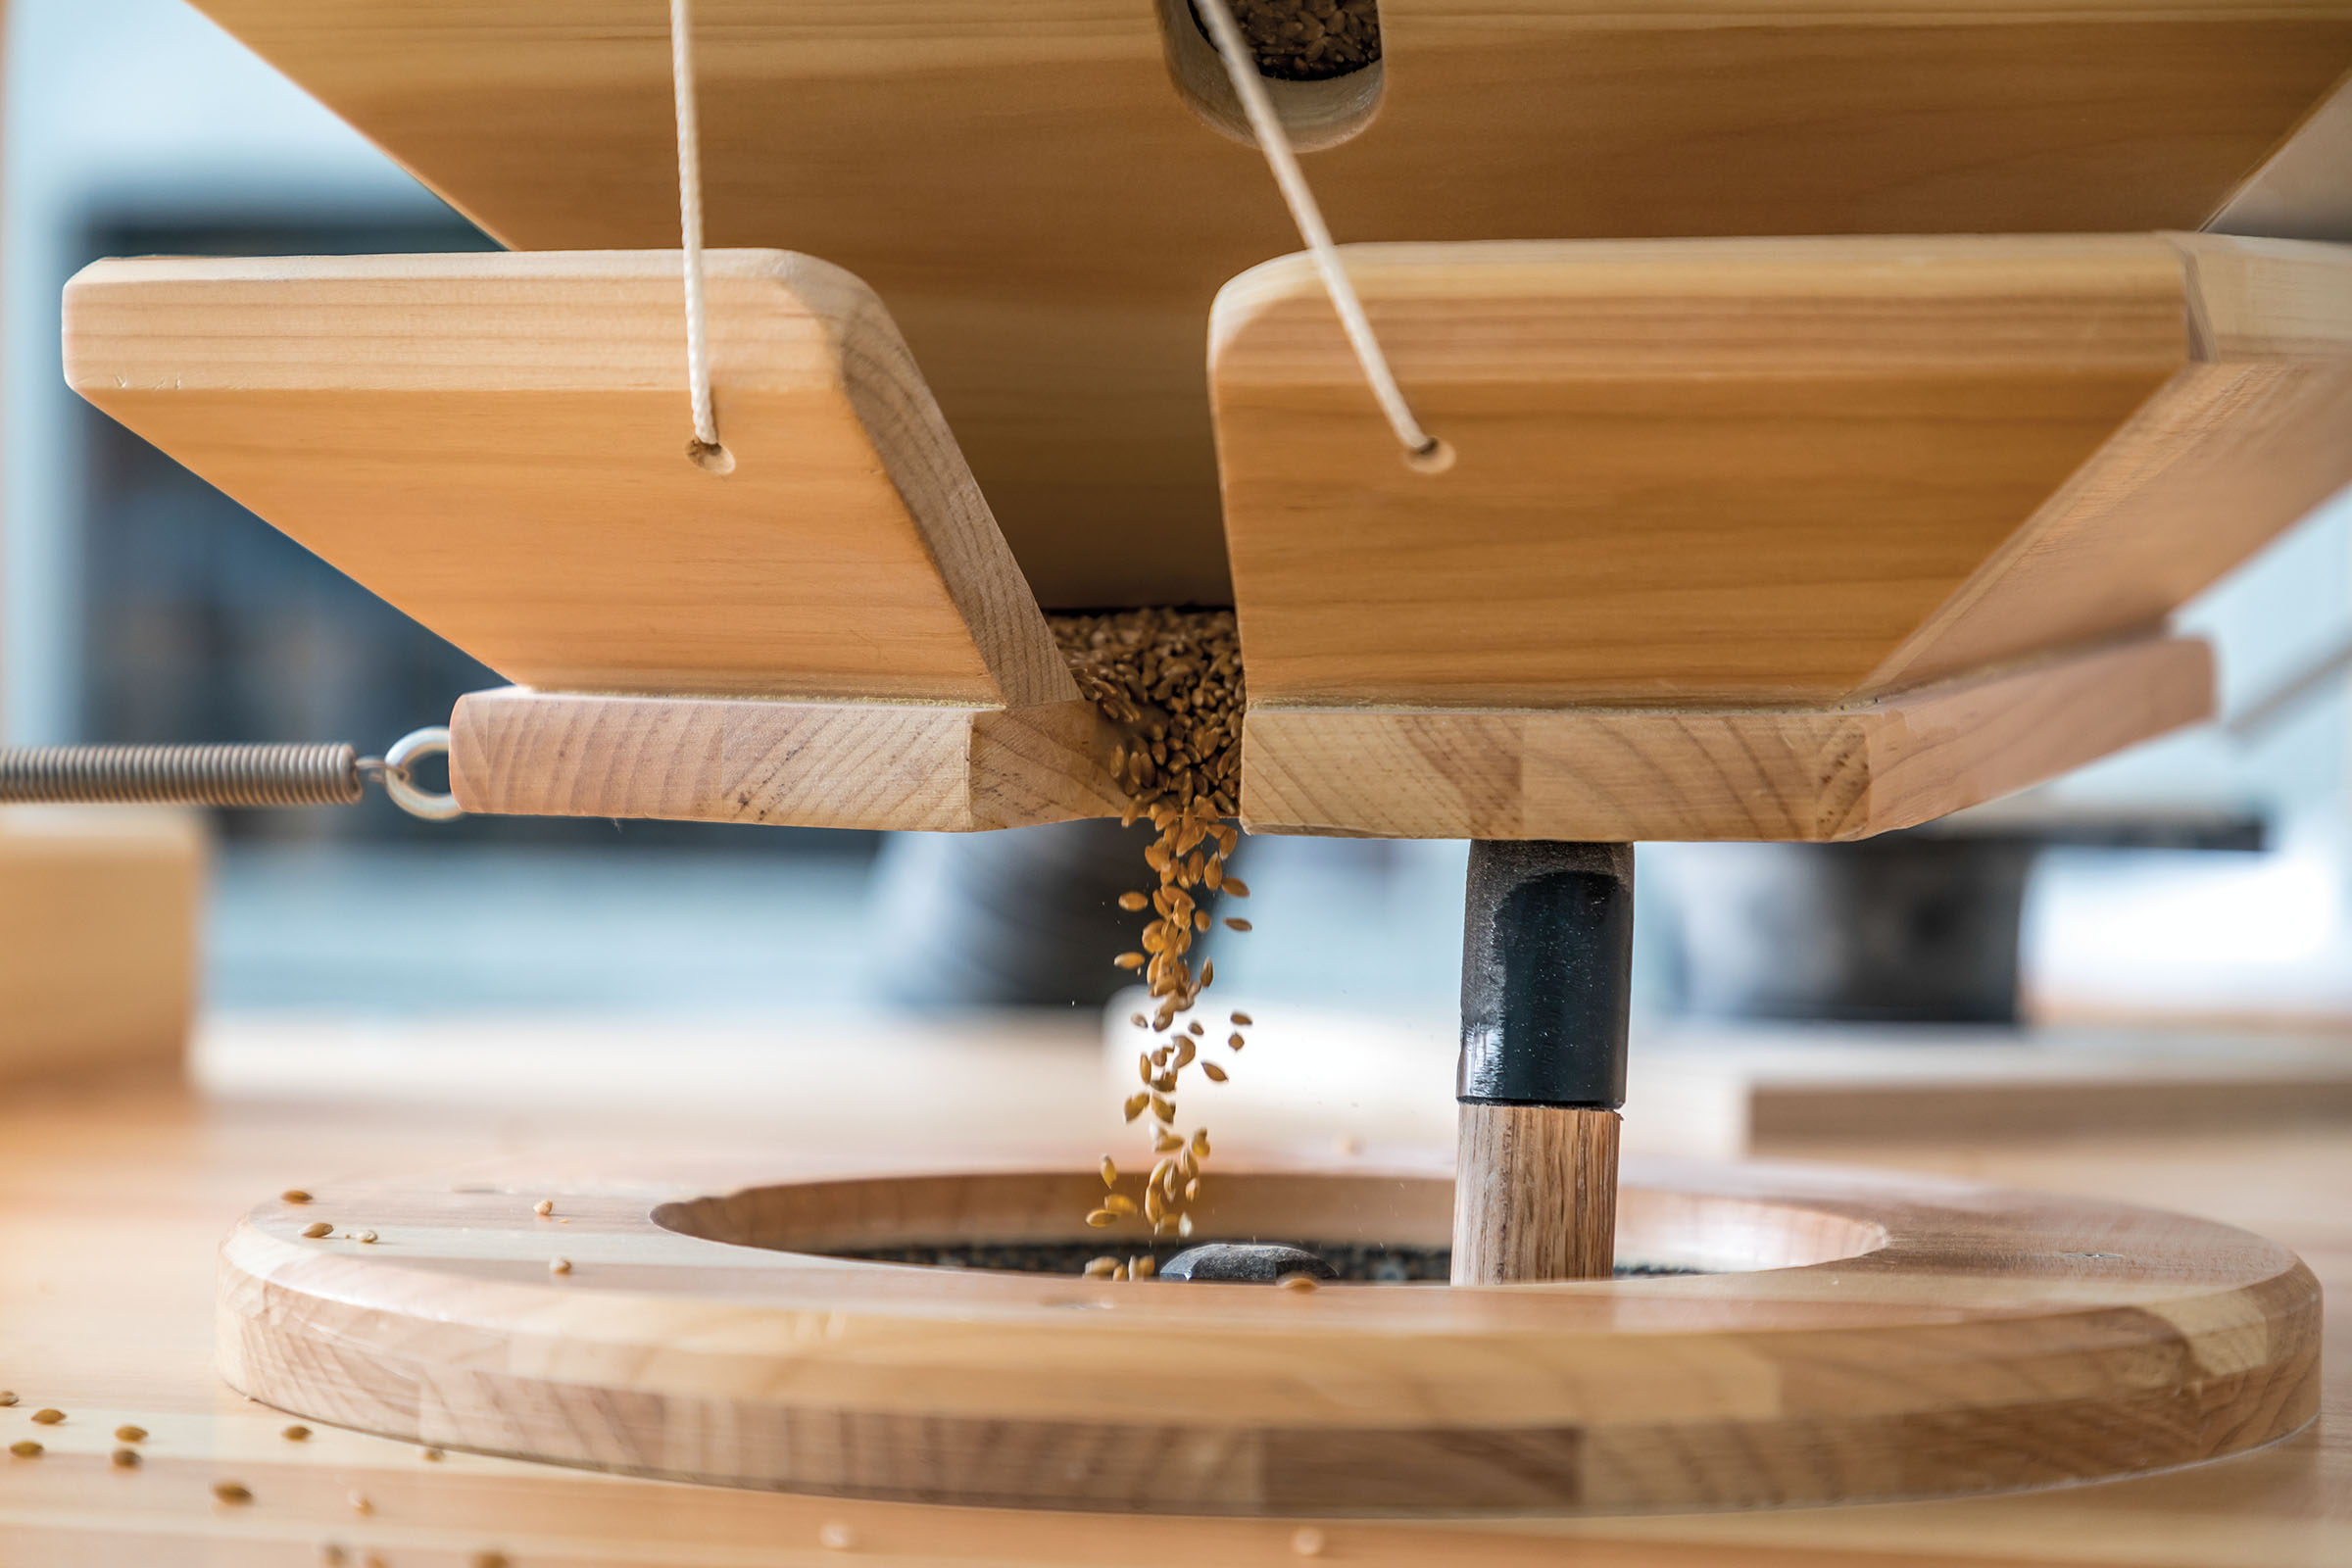 Small kernels of grain pass through a wooden hopper into a mill